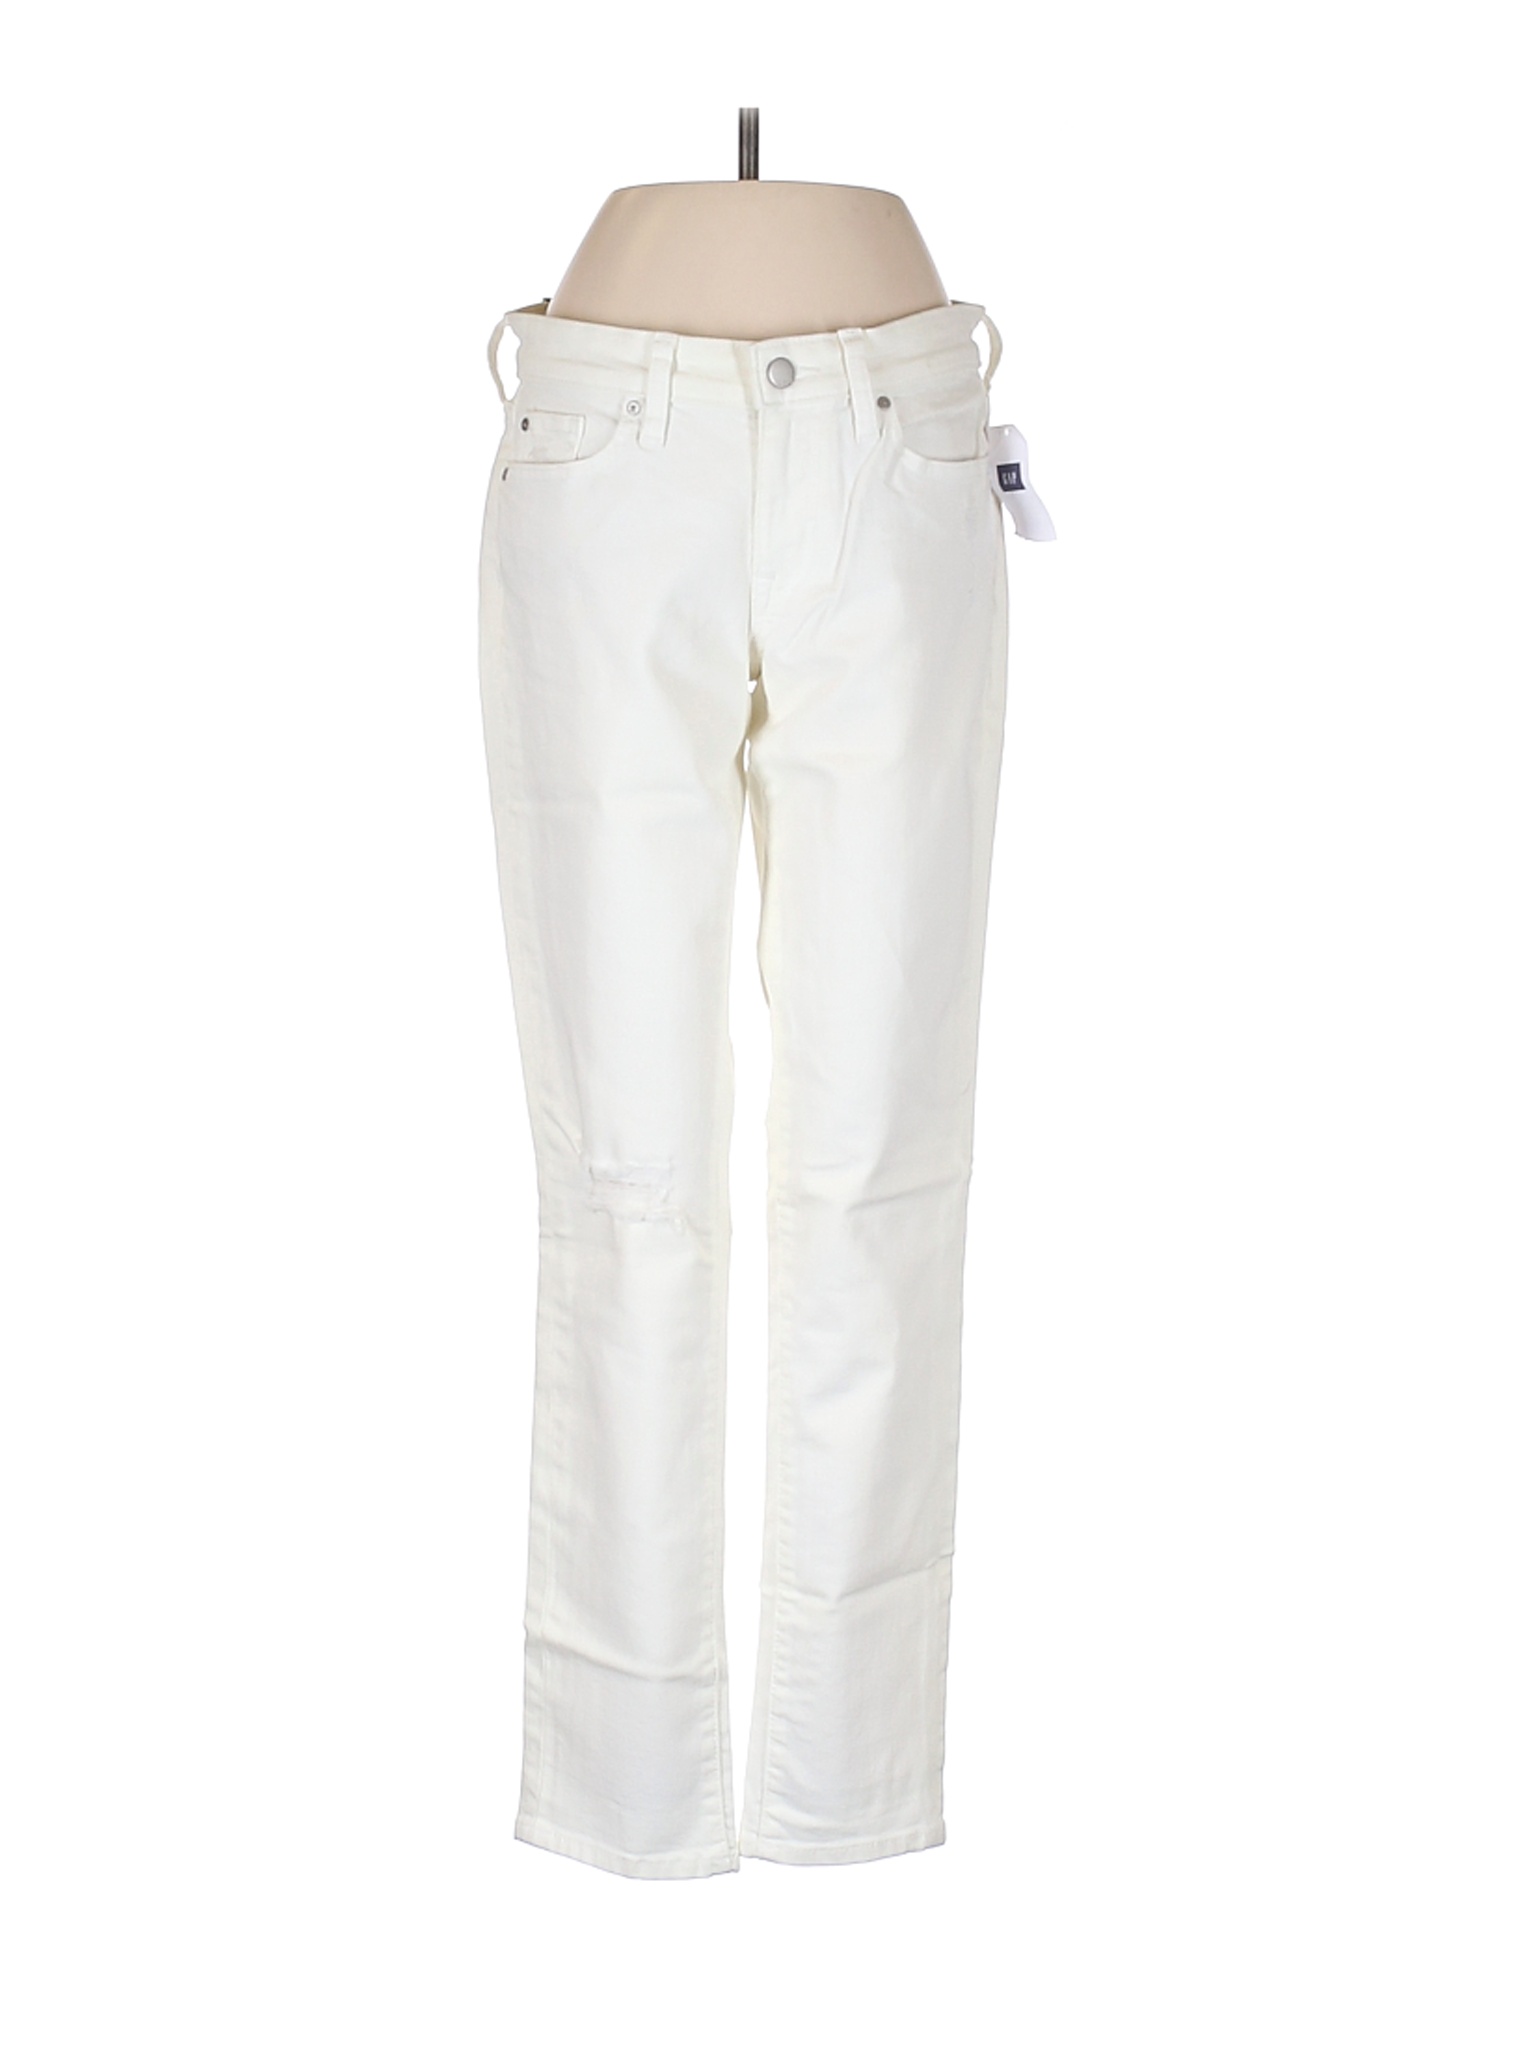 NWT Gap Women White Jeans 2 | eBay